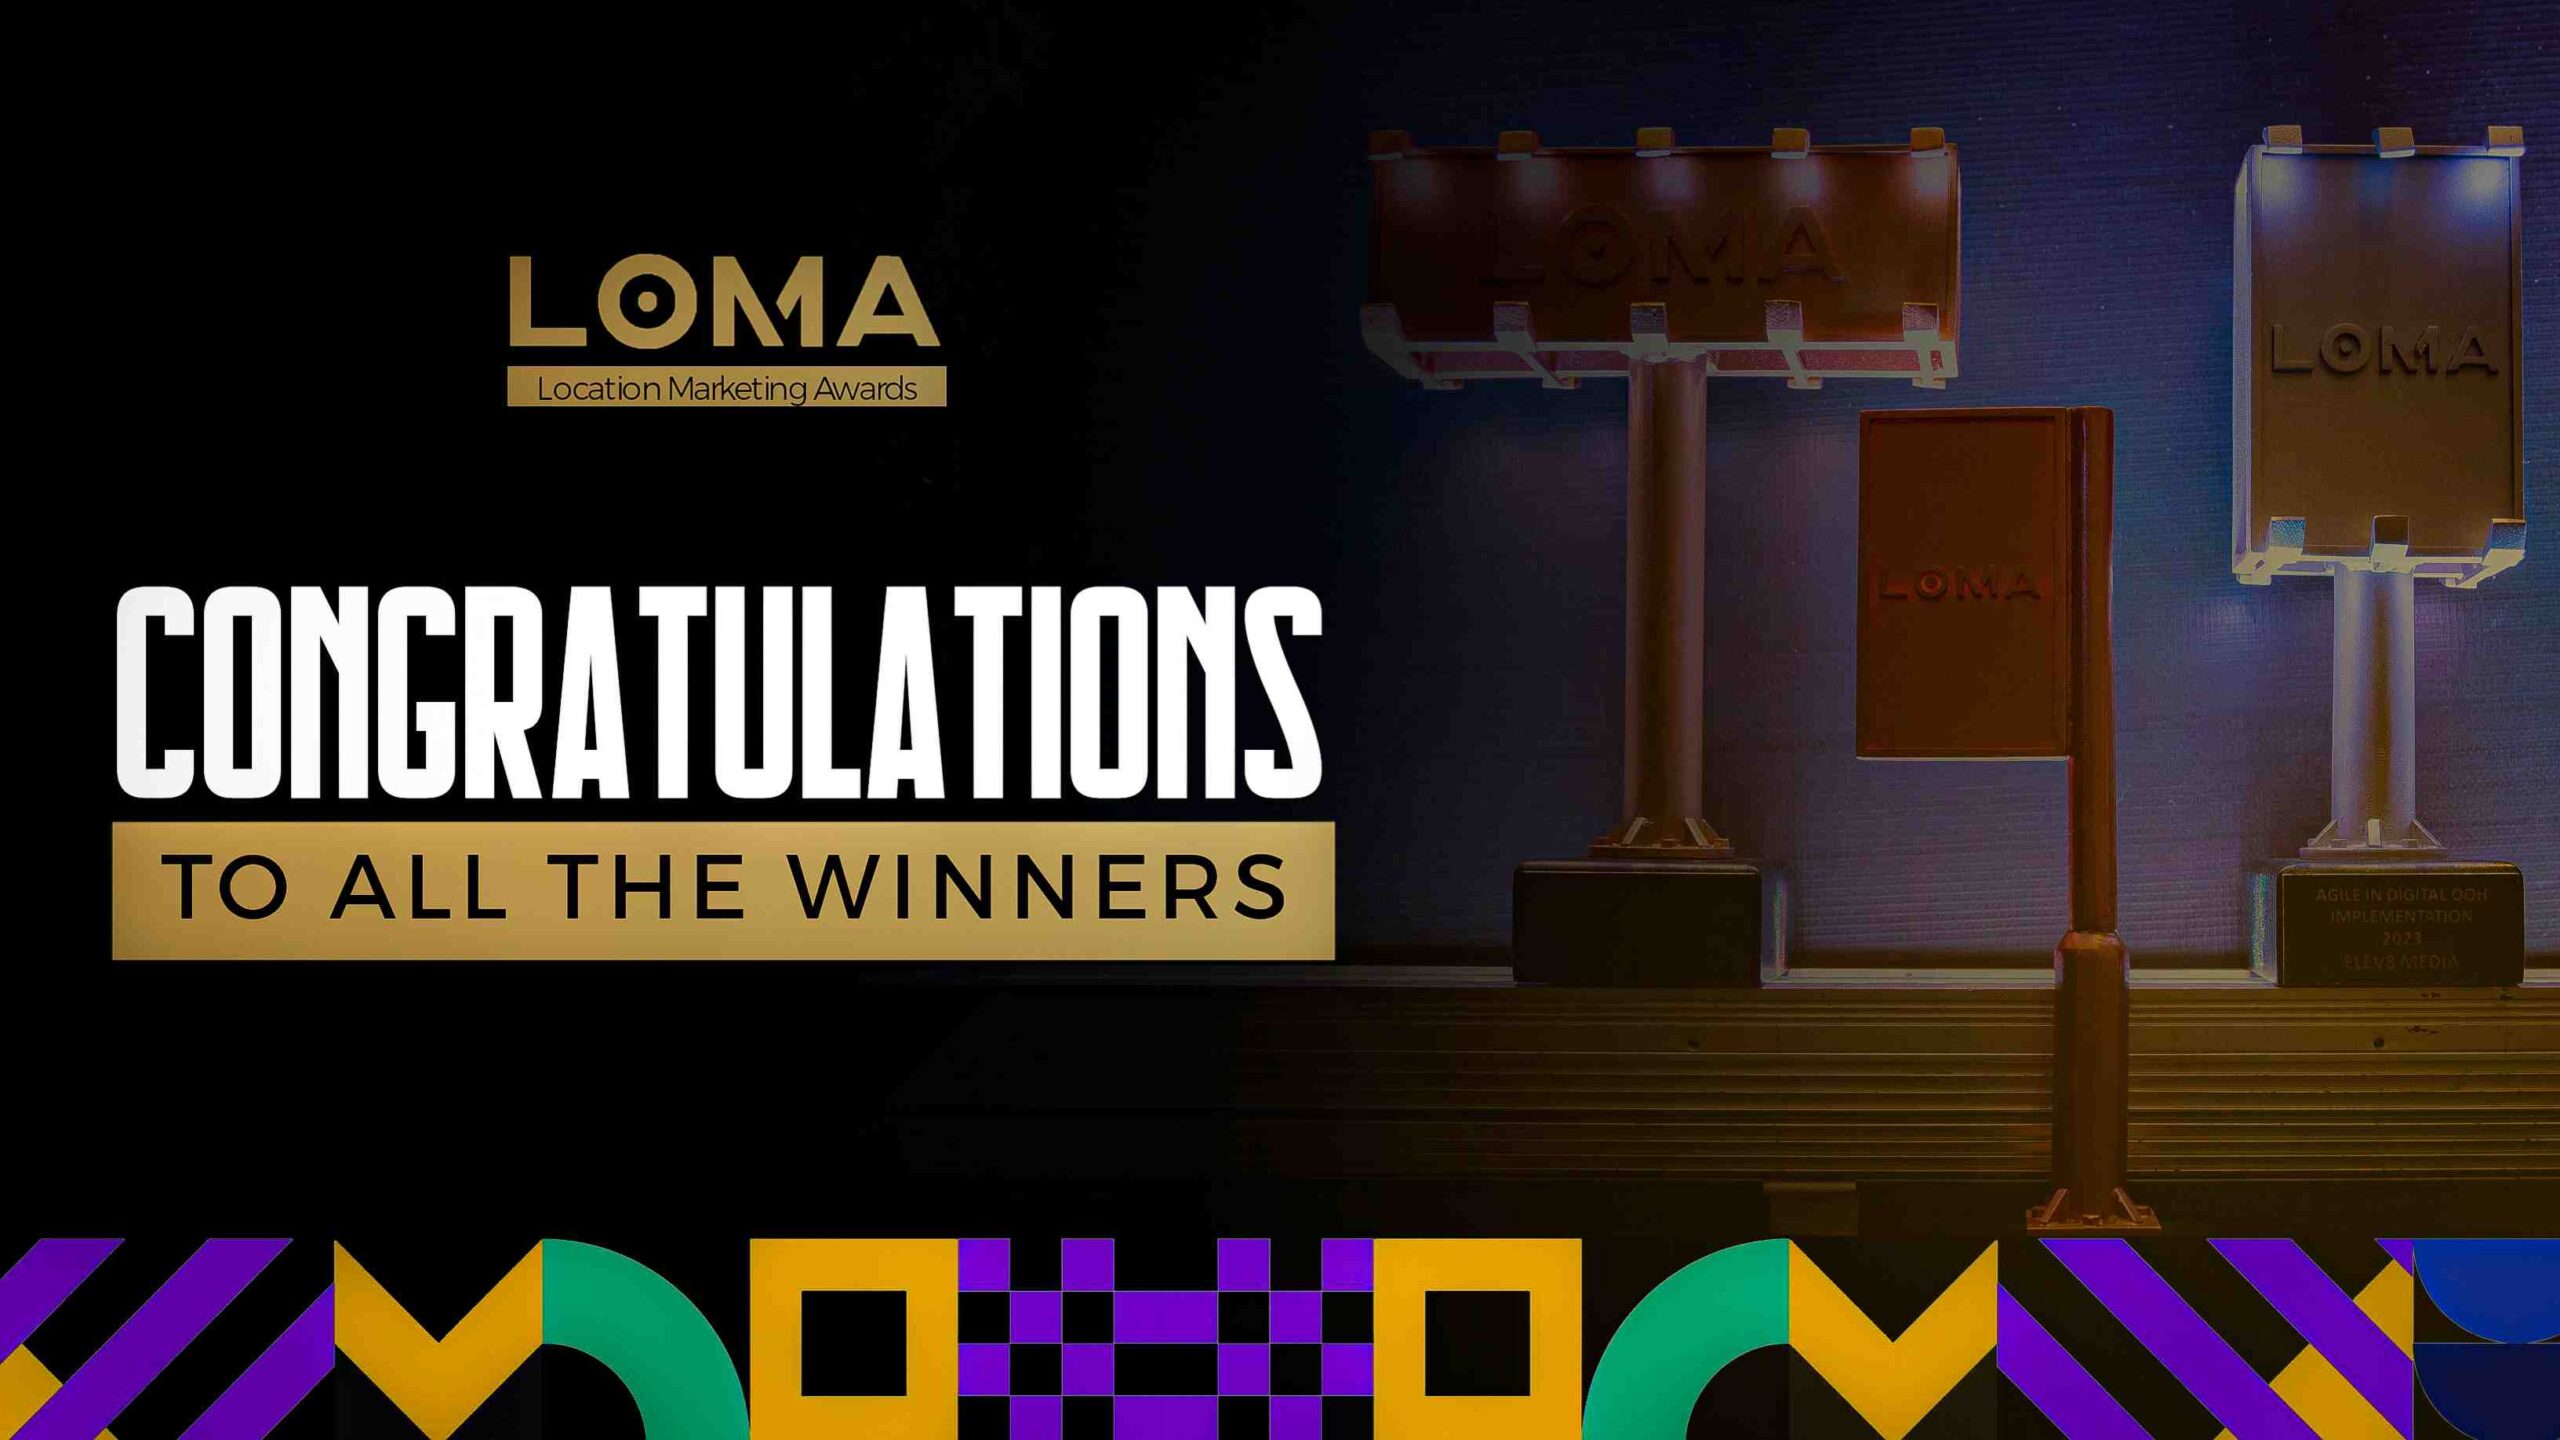 LOMA congratulates winners